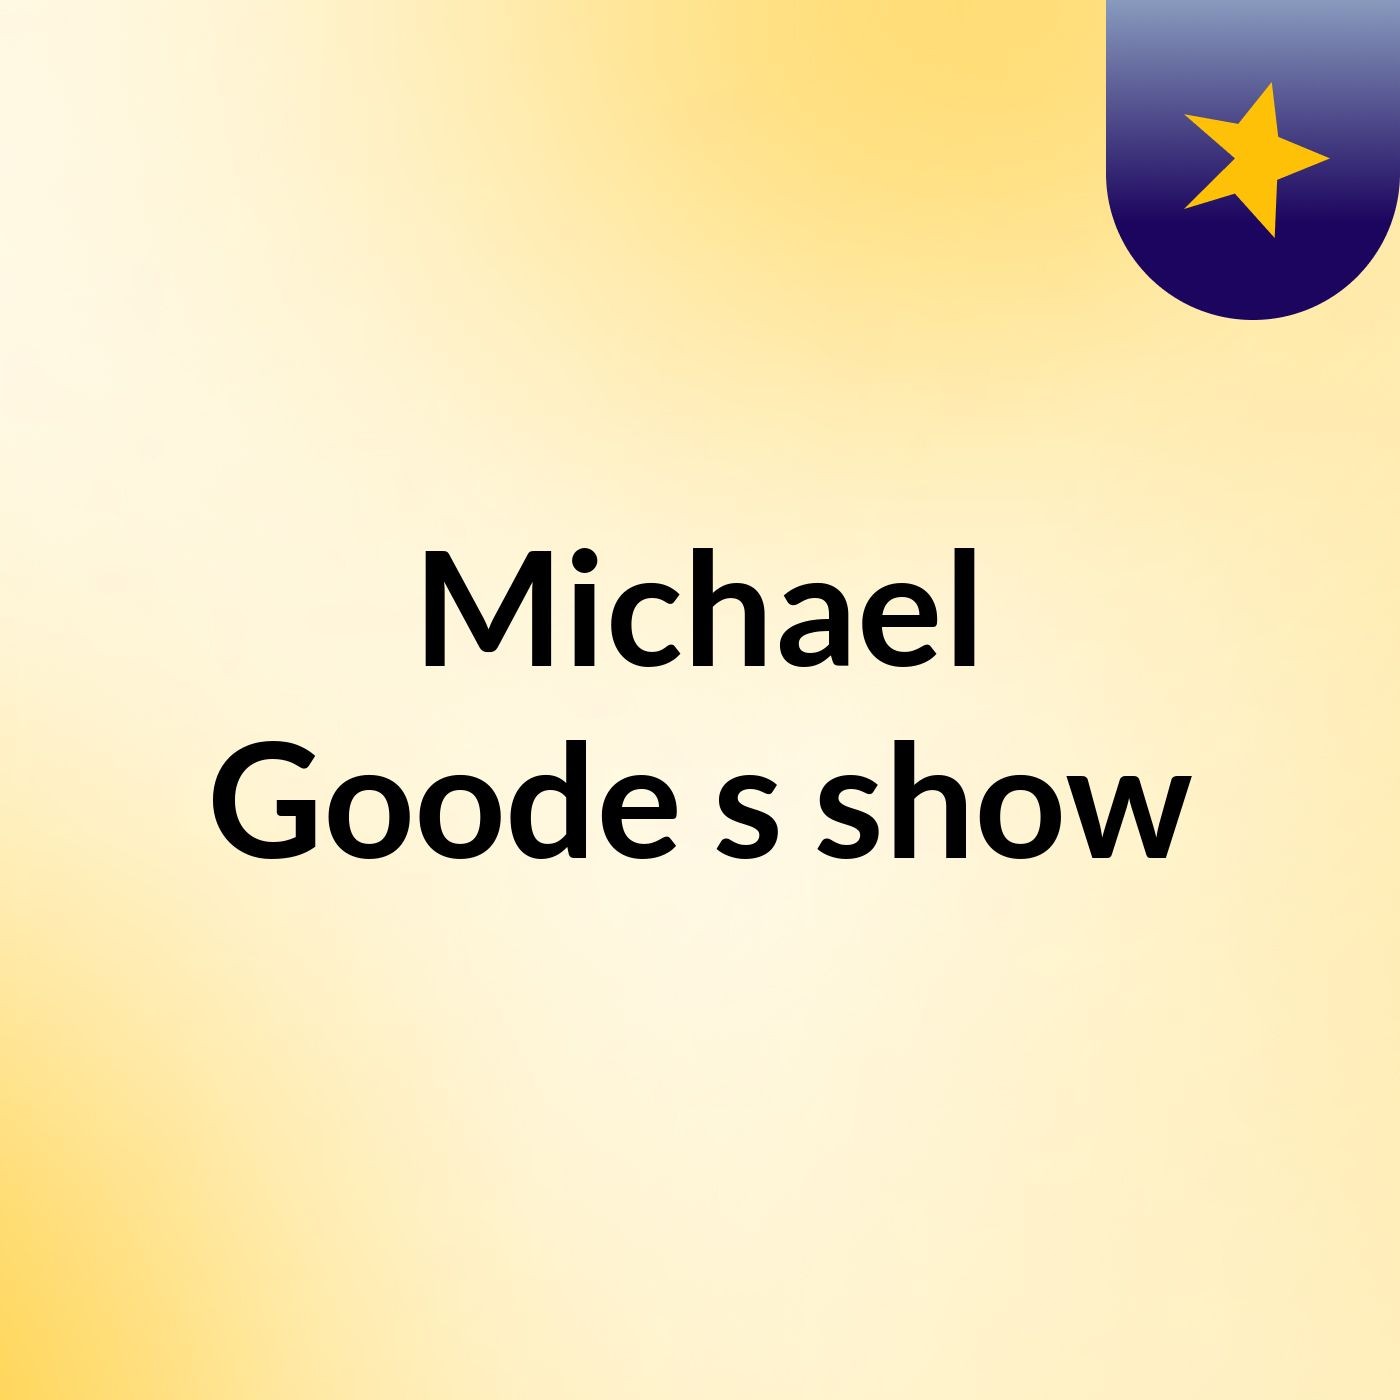 Episode 5 - Michael Goode's show